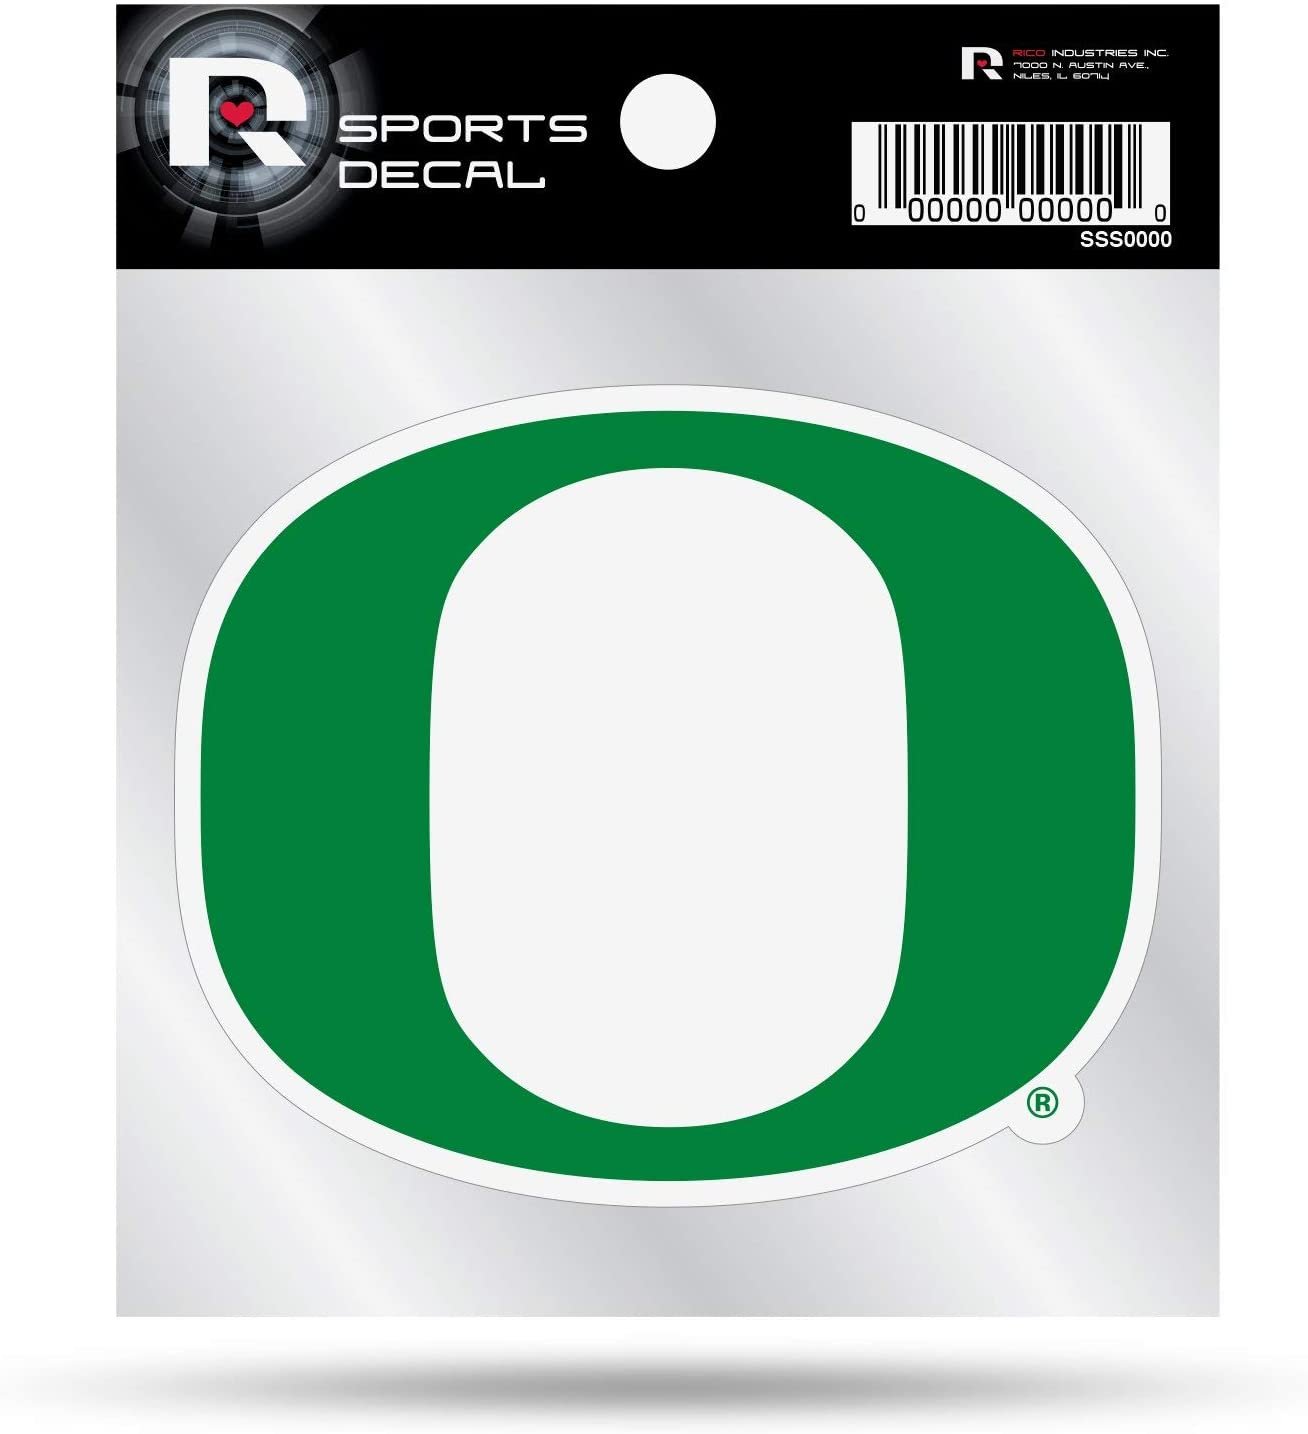 University of Oregon Ducks 4x4 Inch Die Cut Decal Sticker, Primary Logo, Clear Backing